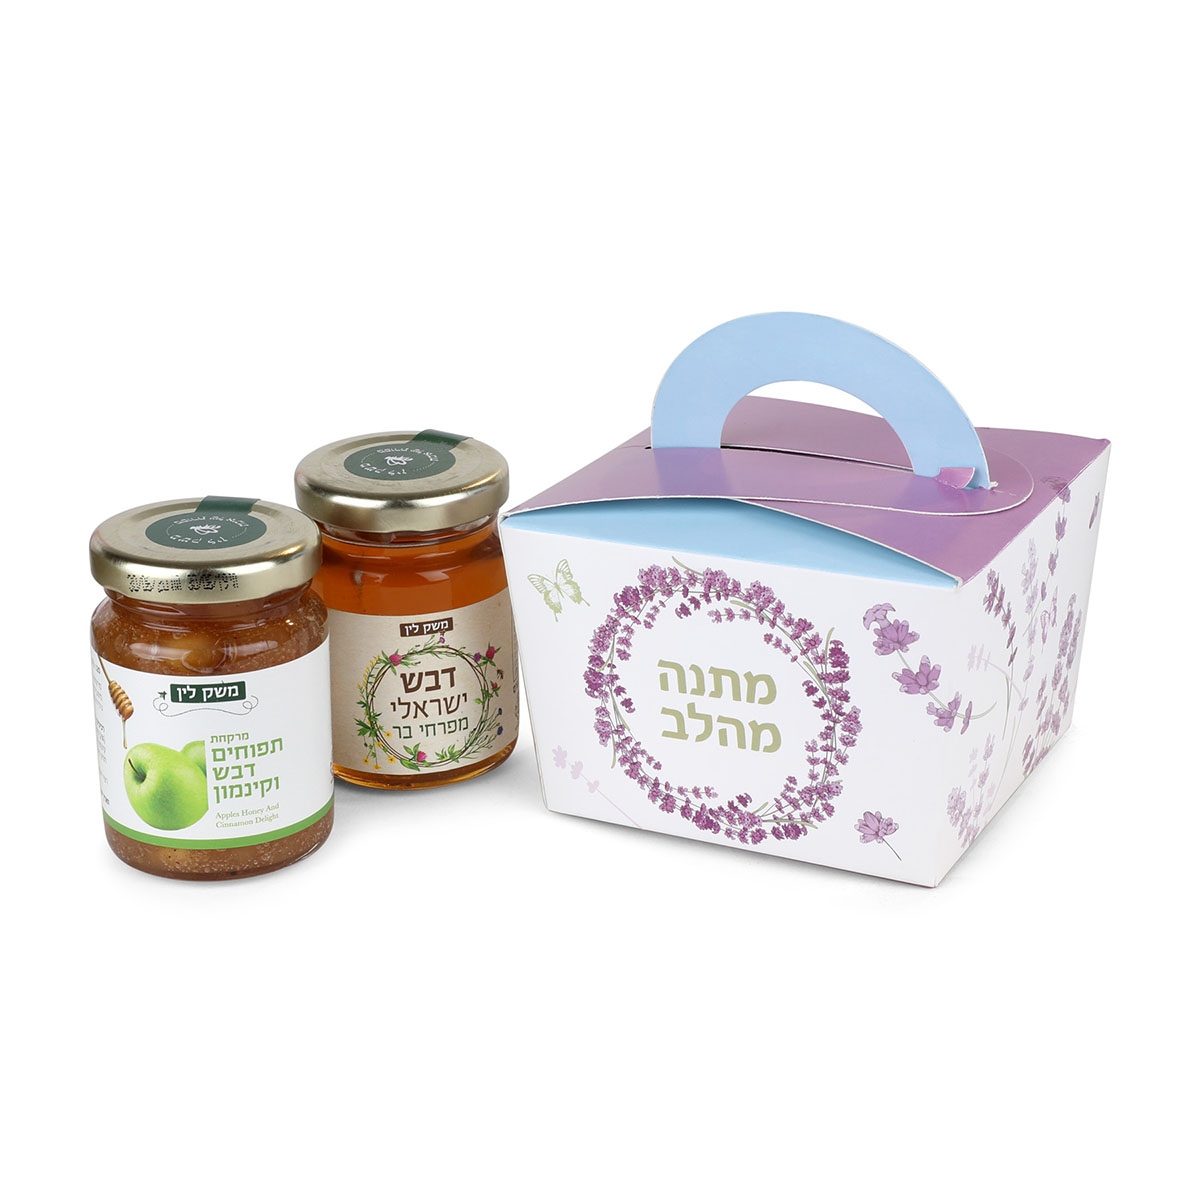 Lin's Farm All-Natural Honey Gift Box - 2